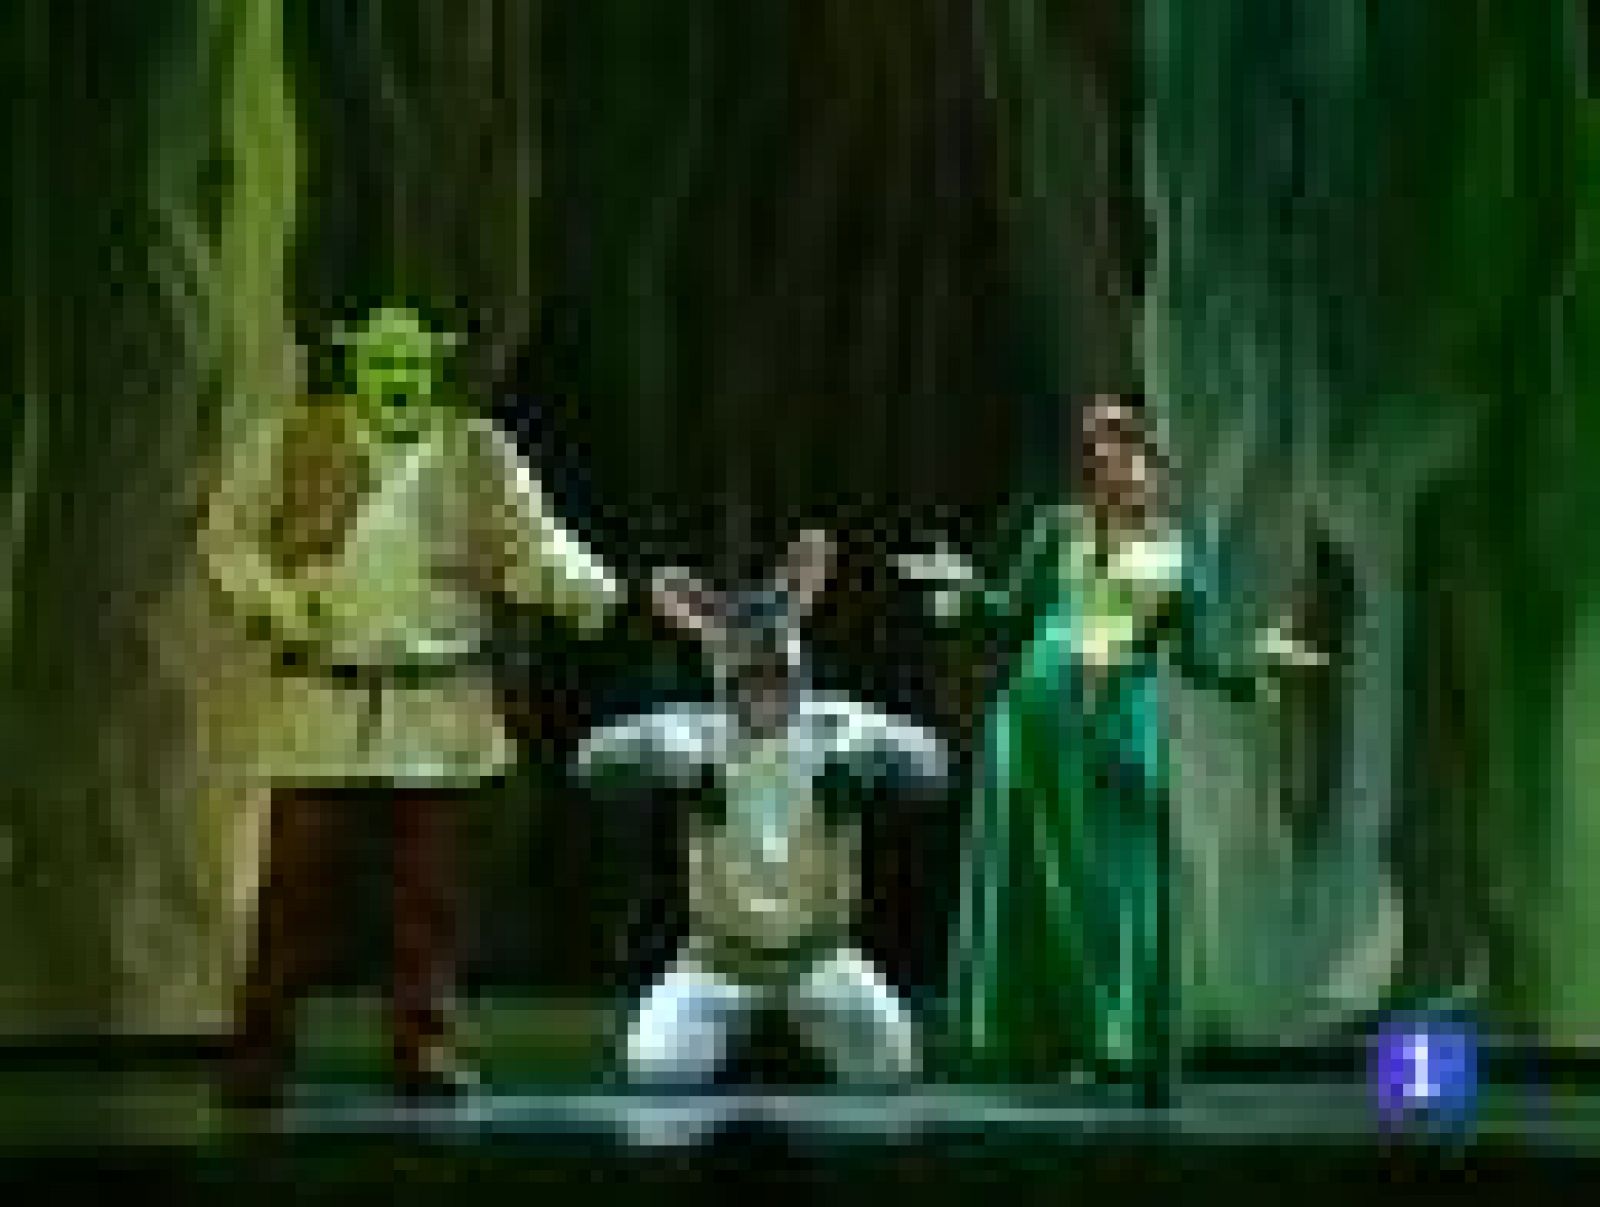 Telediario 1: El musical "Shrek" llega a los teatros españoles | RTVE Play